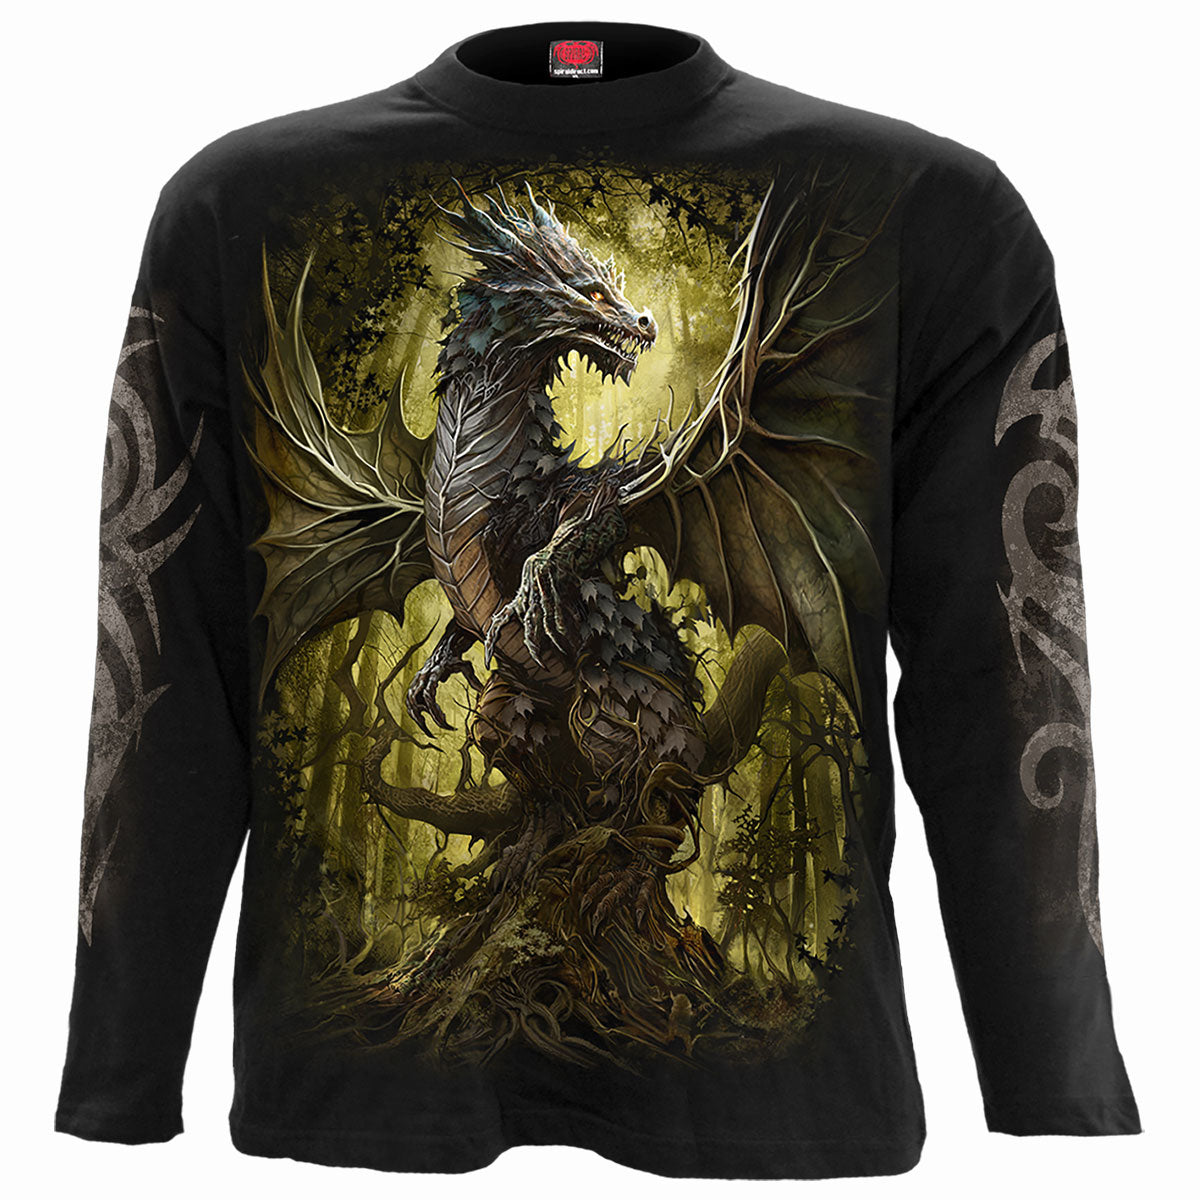 OAK DRAGON - Longsleeve T-Shirt Black